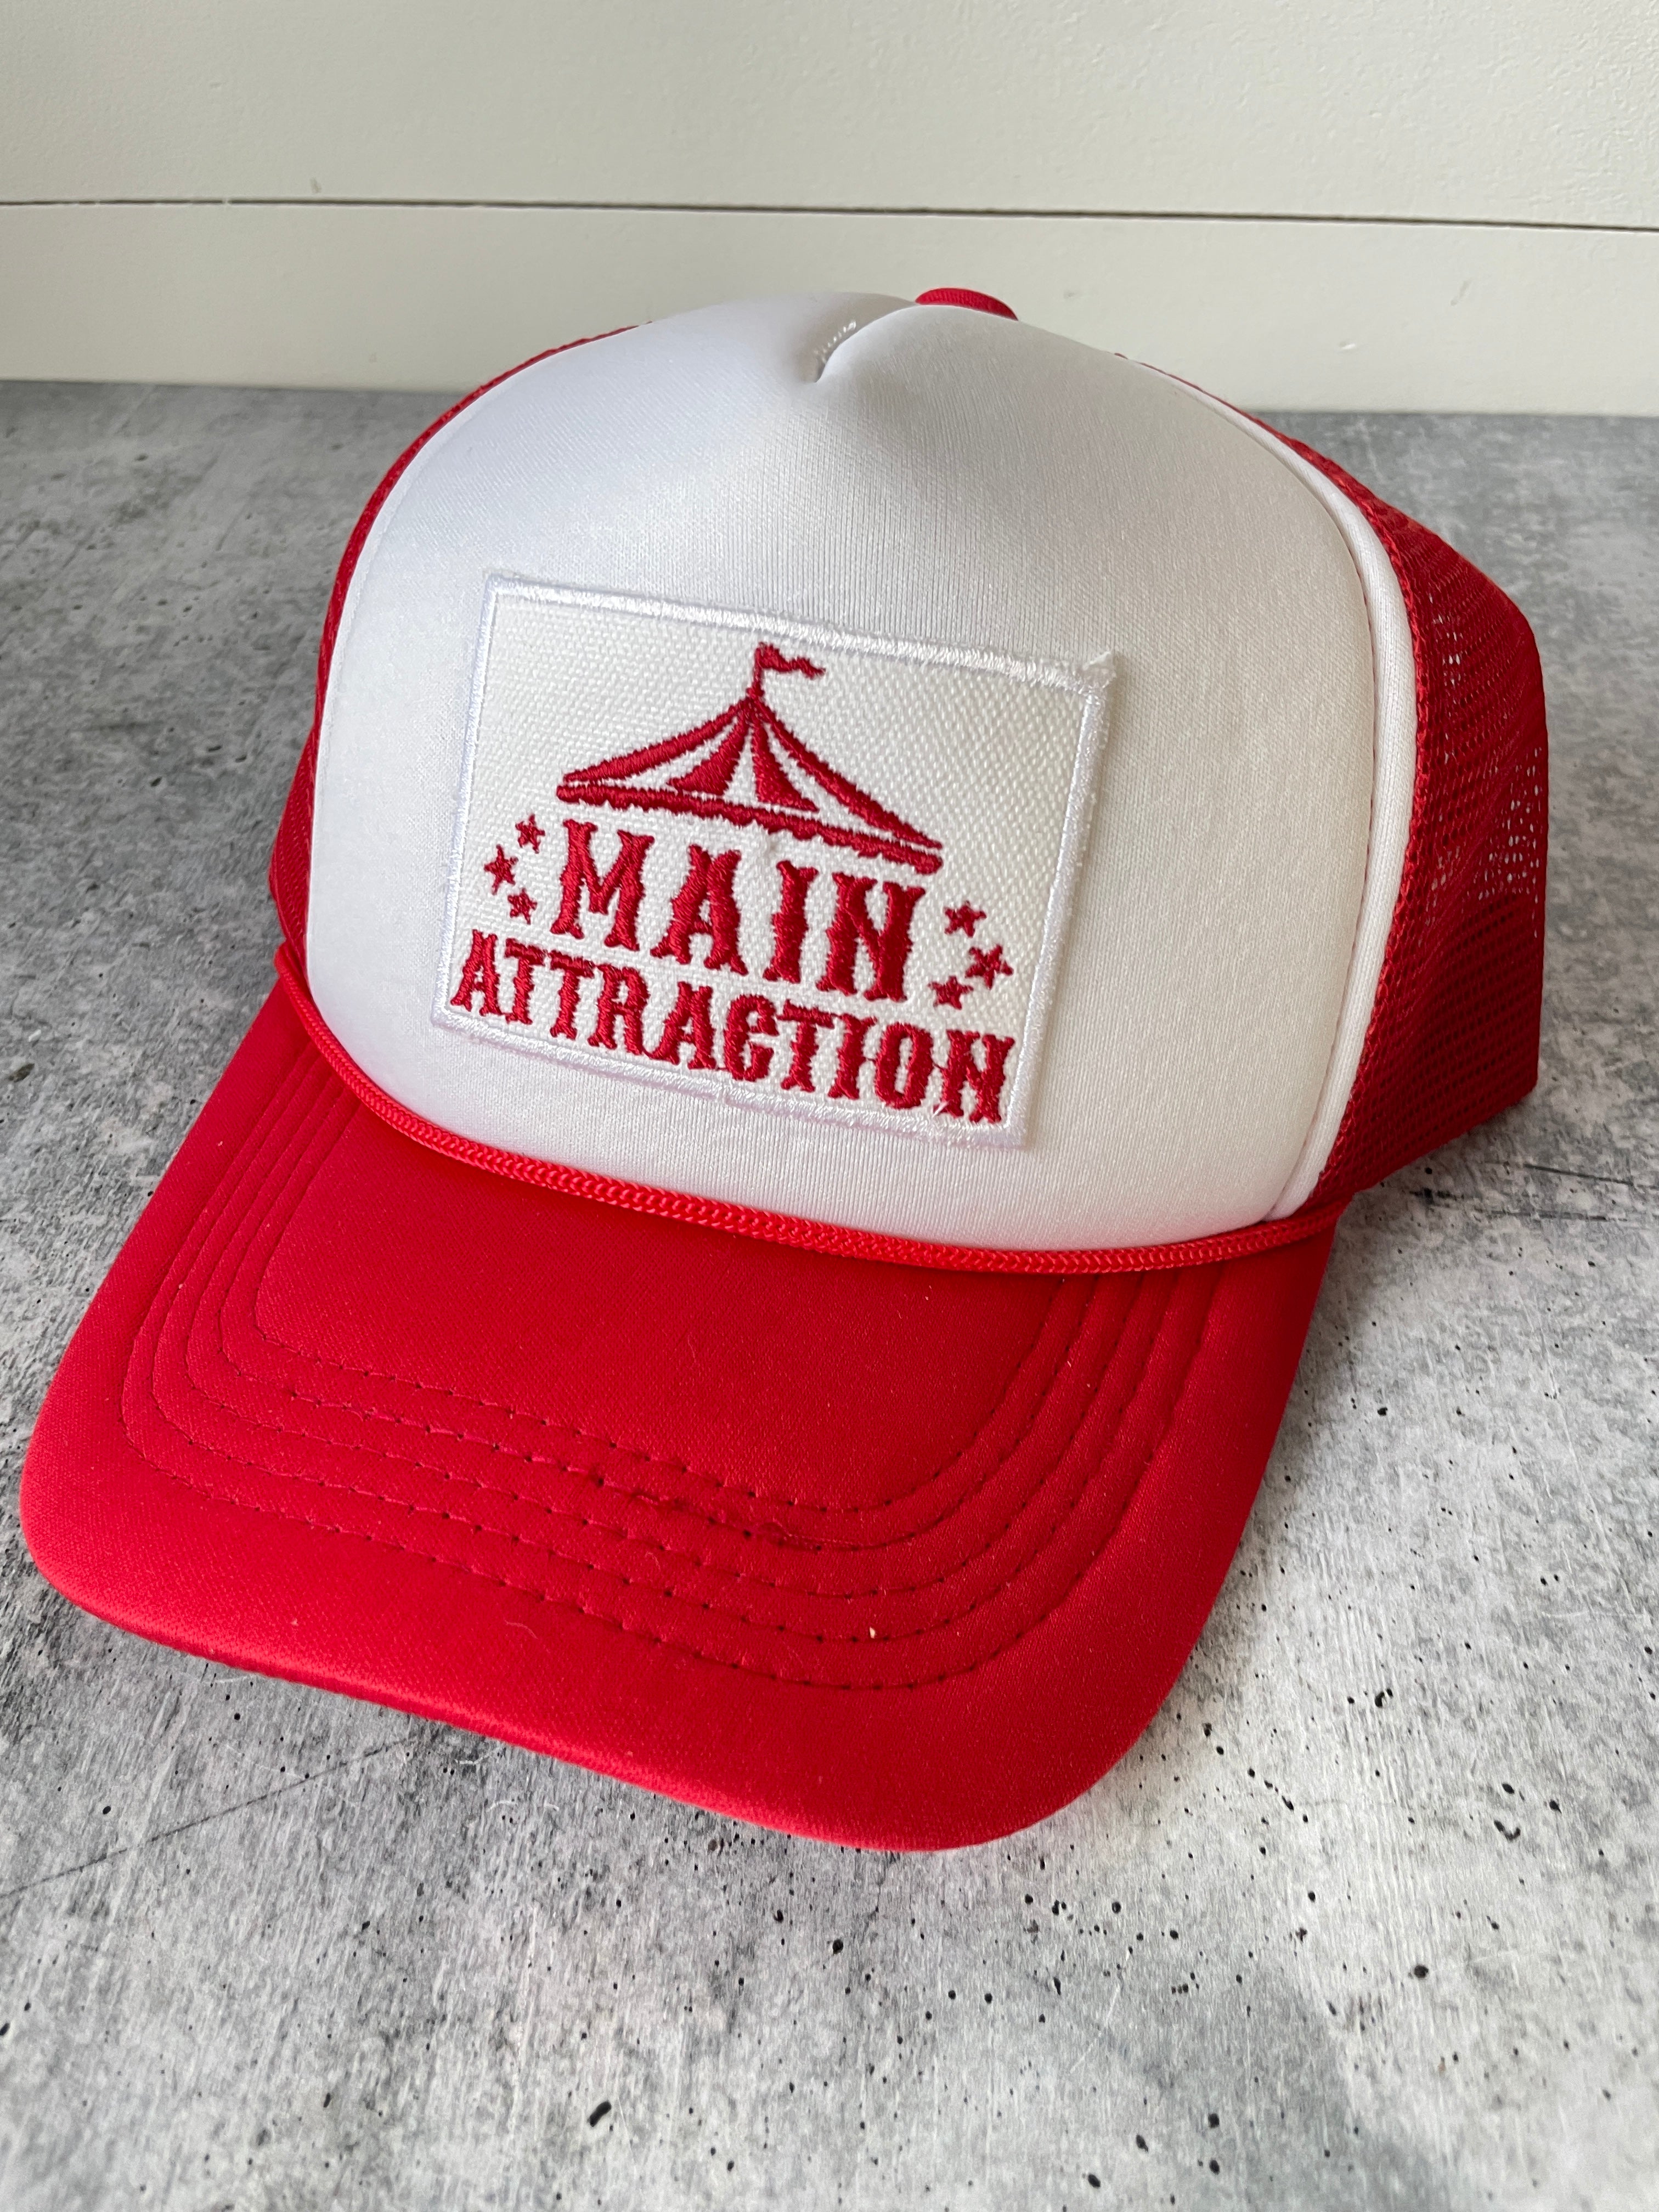 Main Attraction Trucker Hat